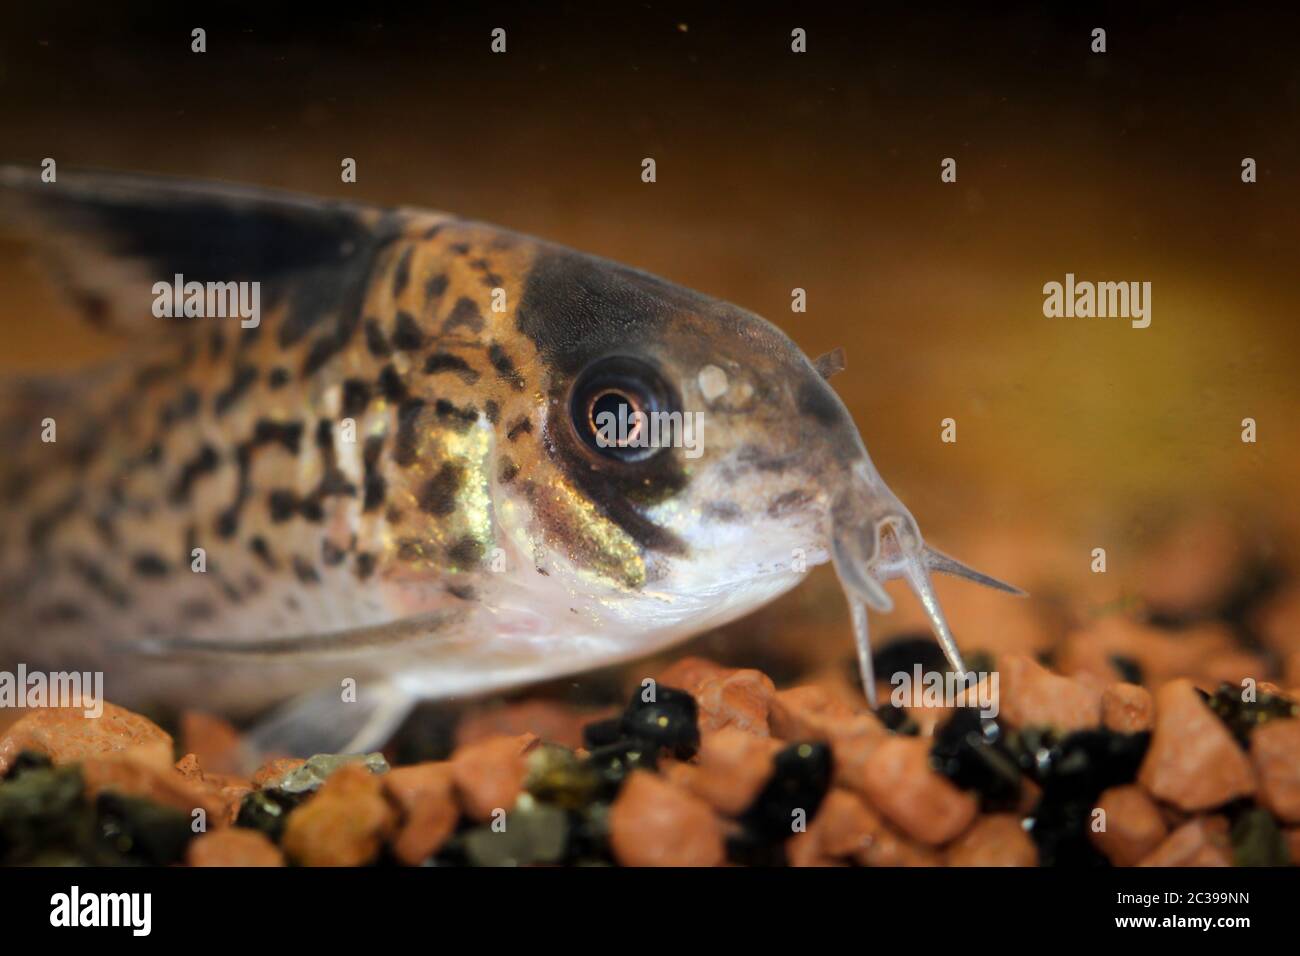 a tank catfish lies on the gravel in the aquarium Stock Photo